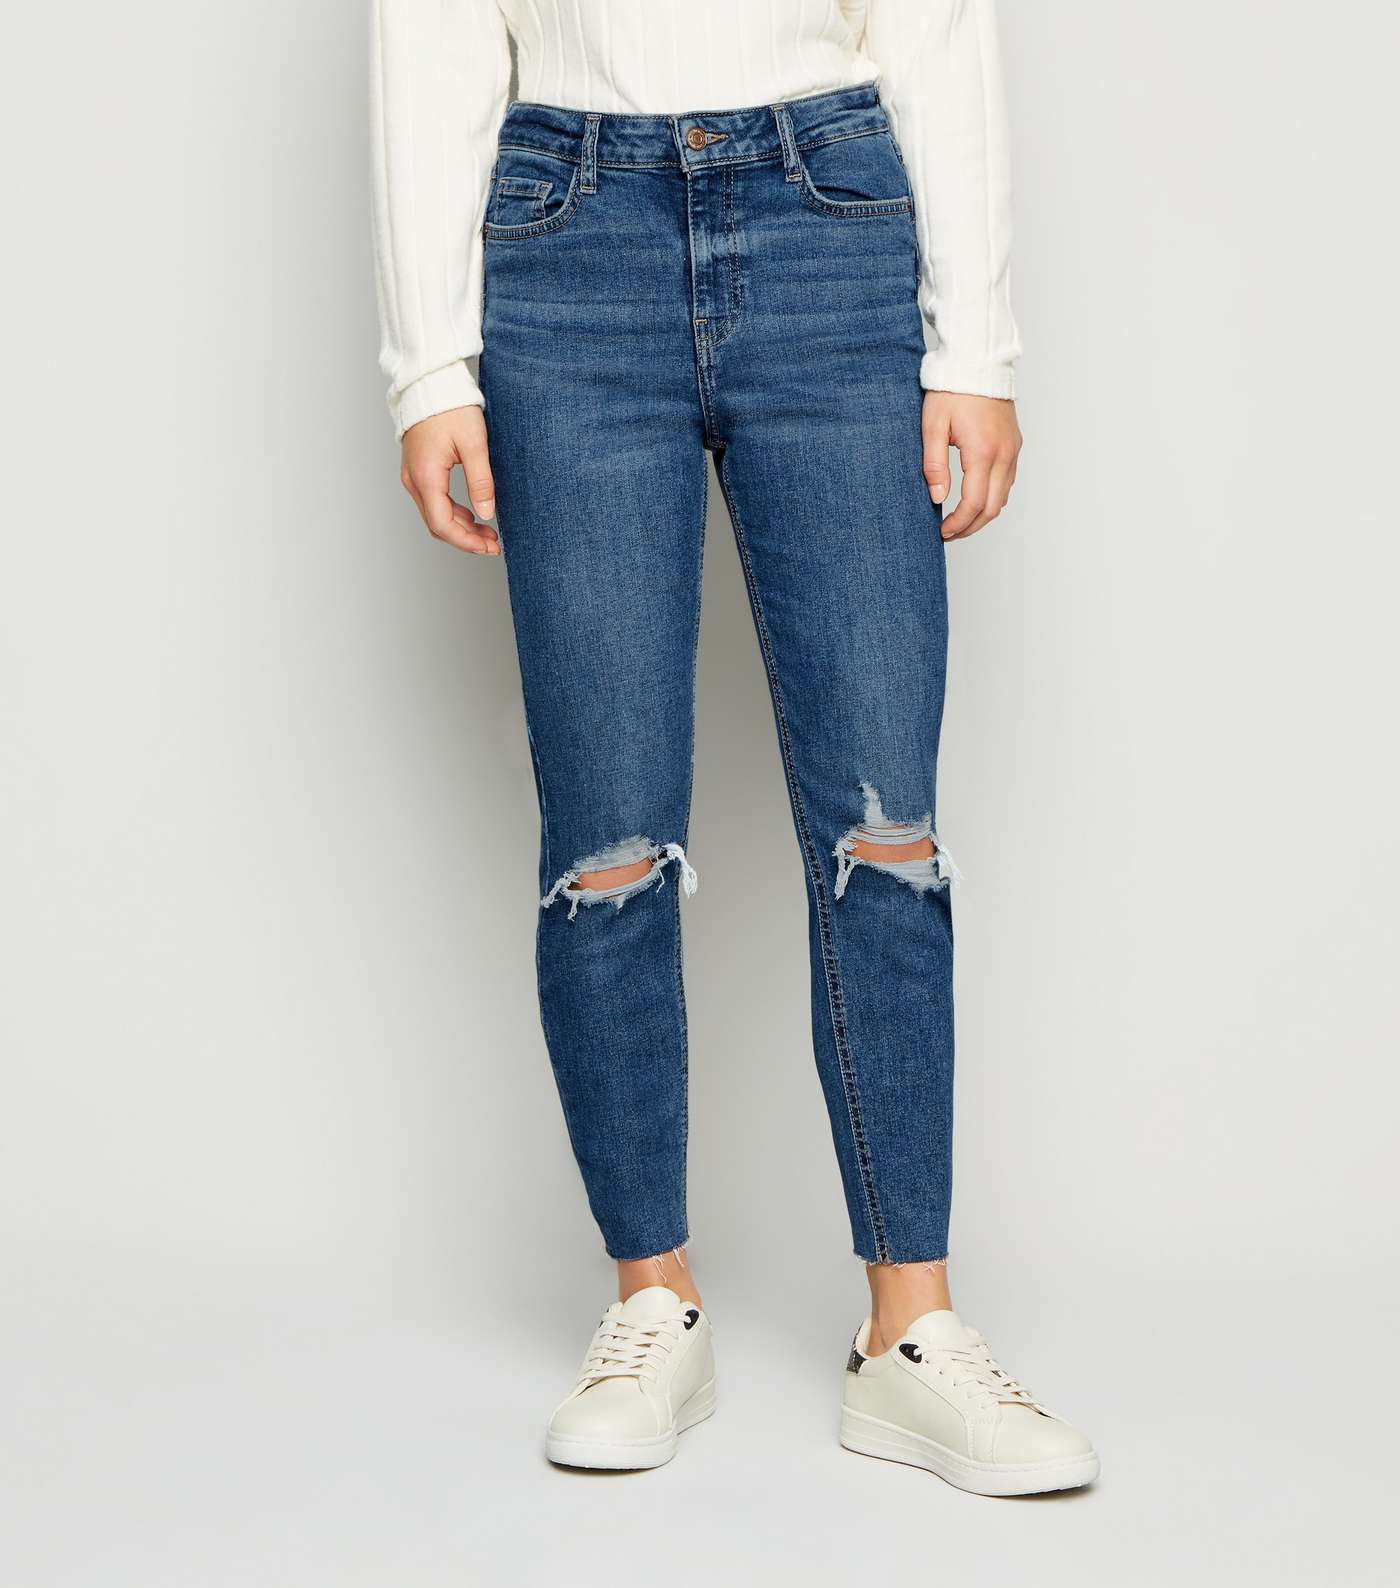 Petite Blue 'Lift & Shape' Ripped Jenna Skinny Jeans Image 2